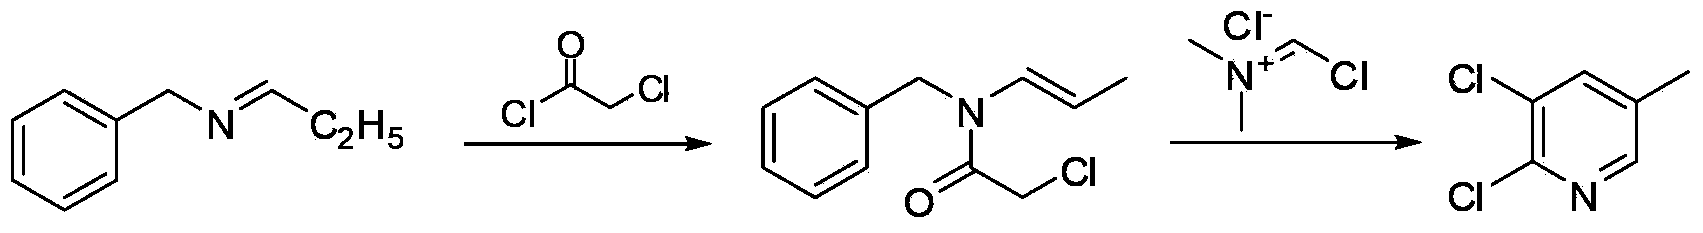 Synthesis method of 2,3-dichloro-5-methylpyridine